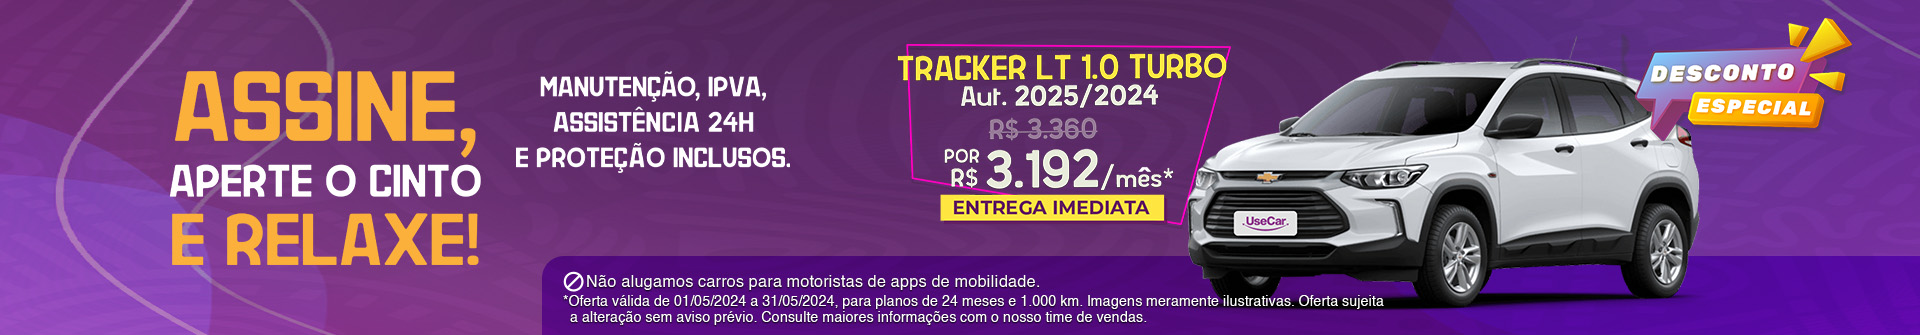 Tracker_MAIO